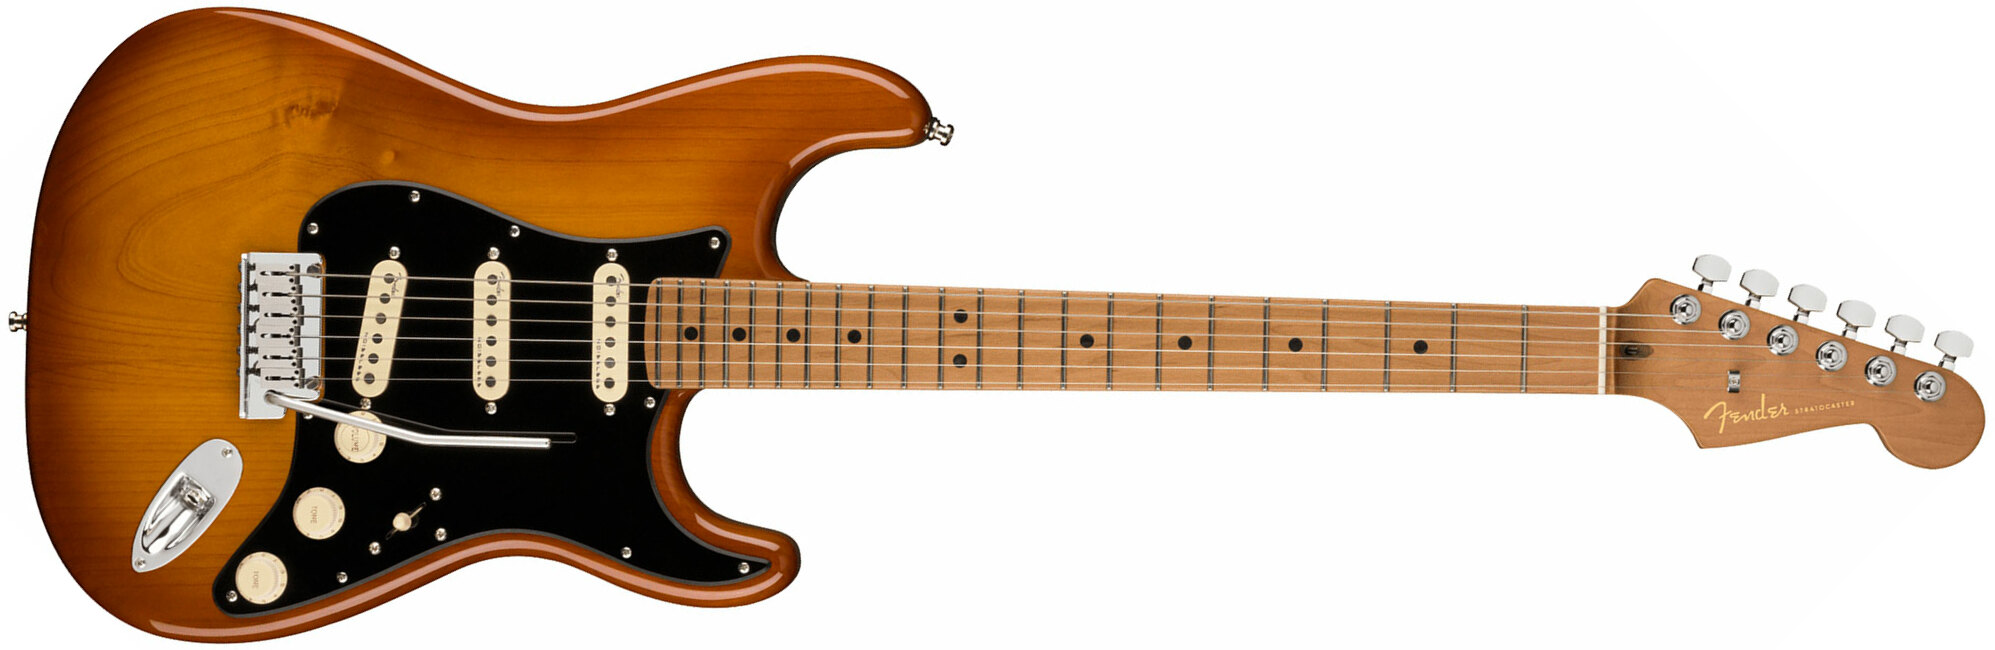 Fender Strat American Ultra Roasted Fretboard Ltd Usa 3s Trem Mn - Honey Burst - Guitarra eléctrica con forma de str. - Main picture